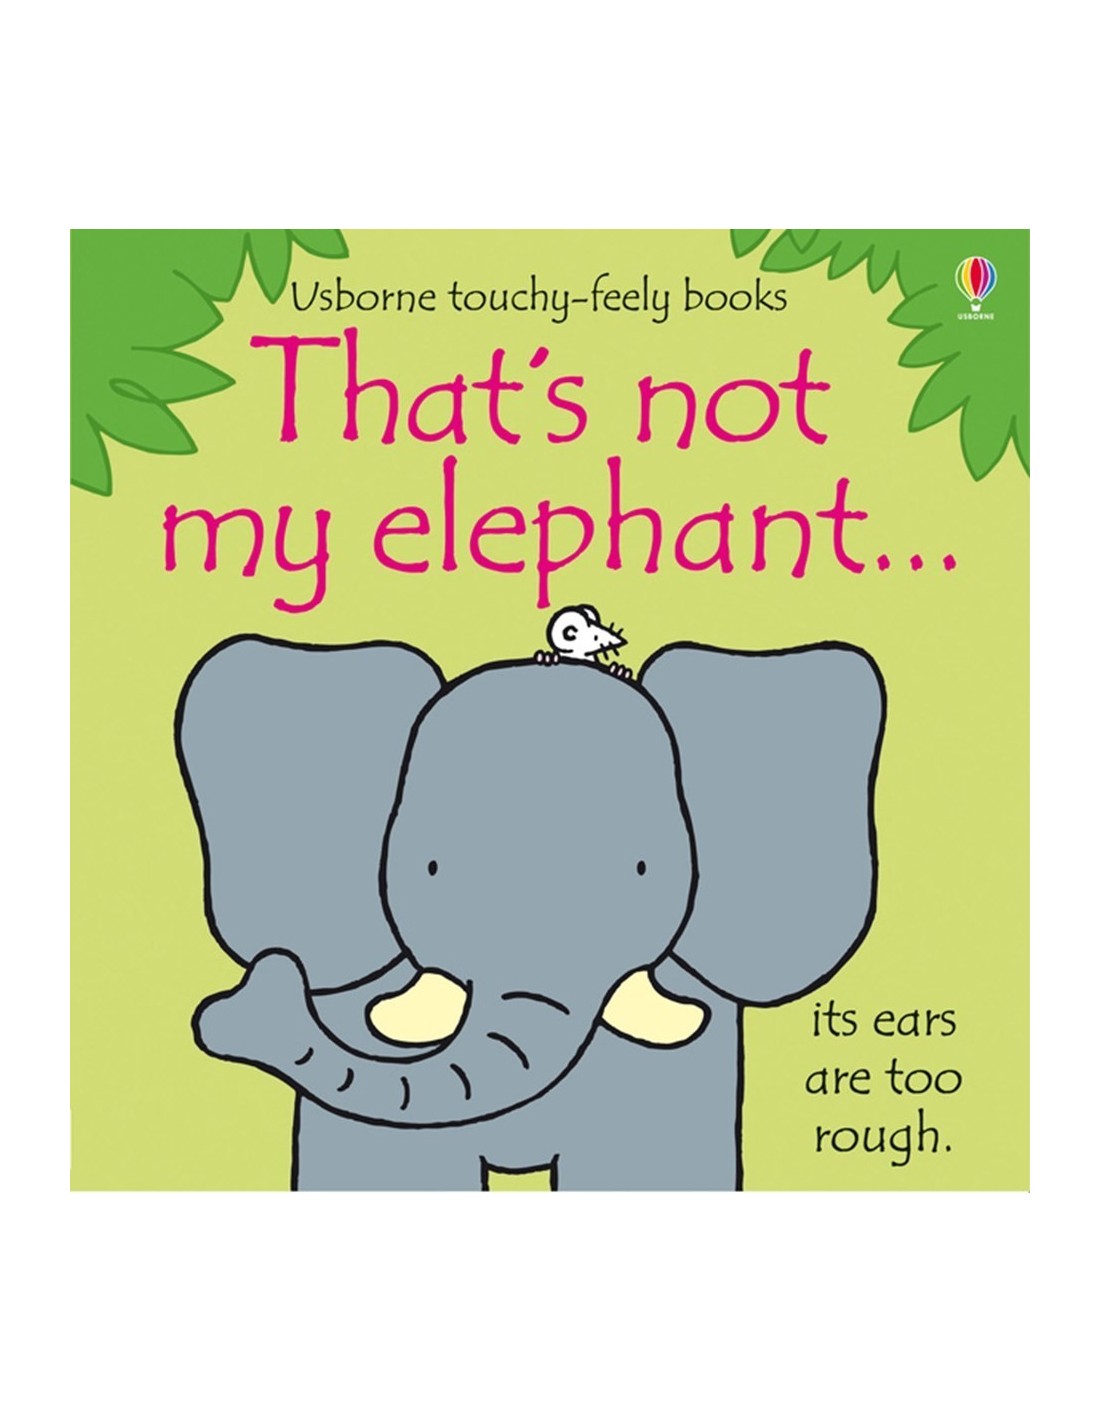 That's not my elephant...